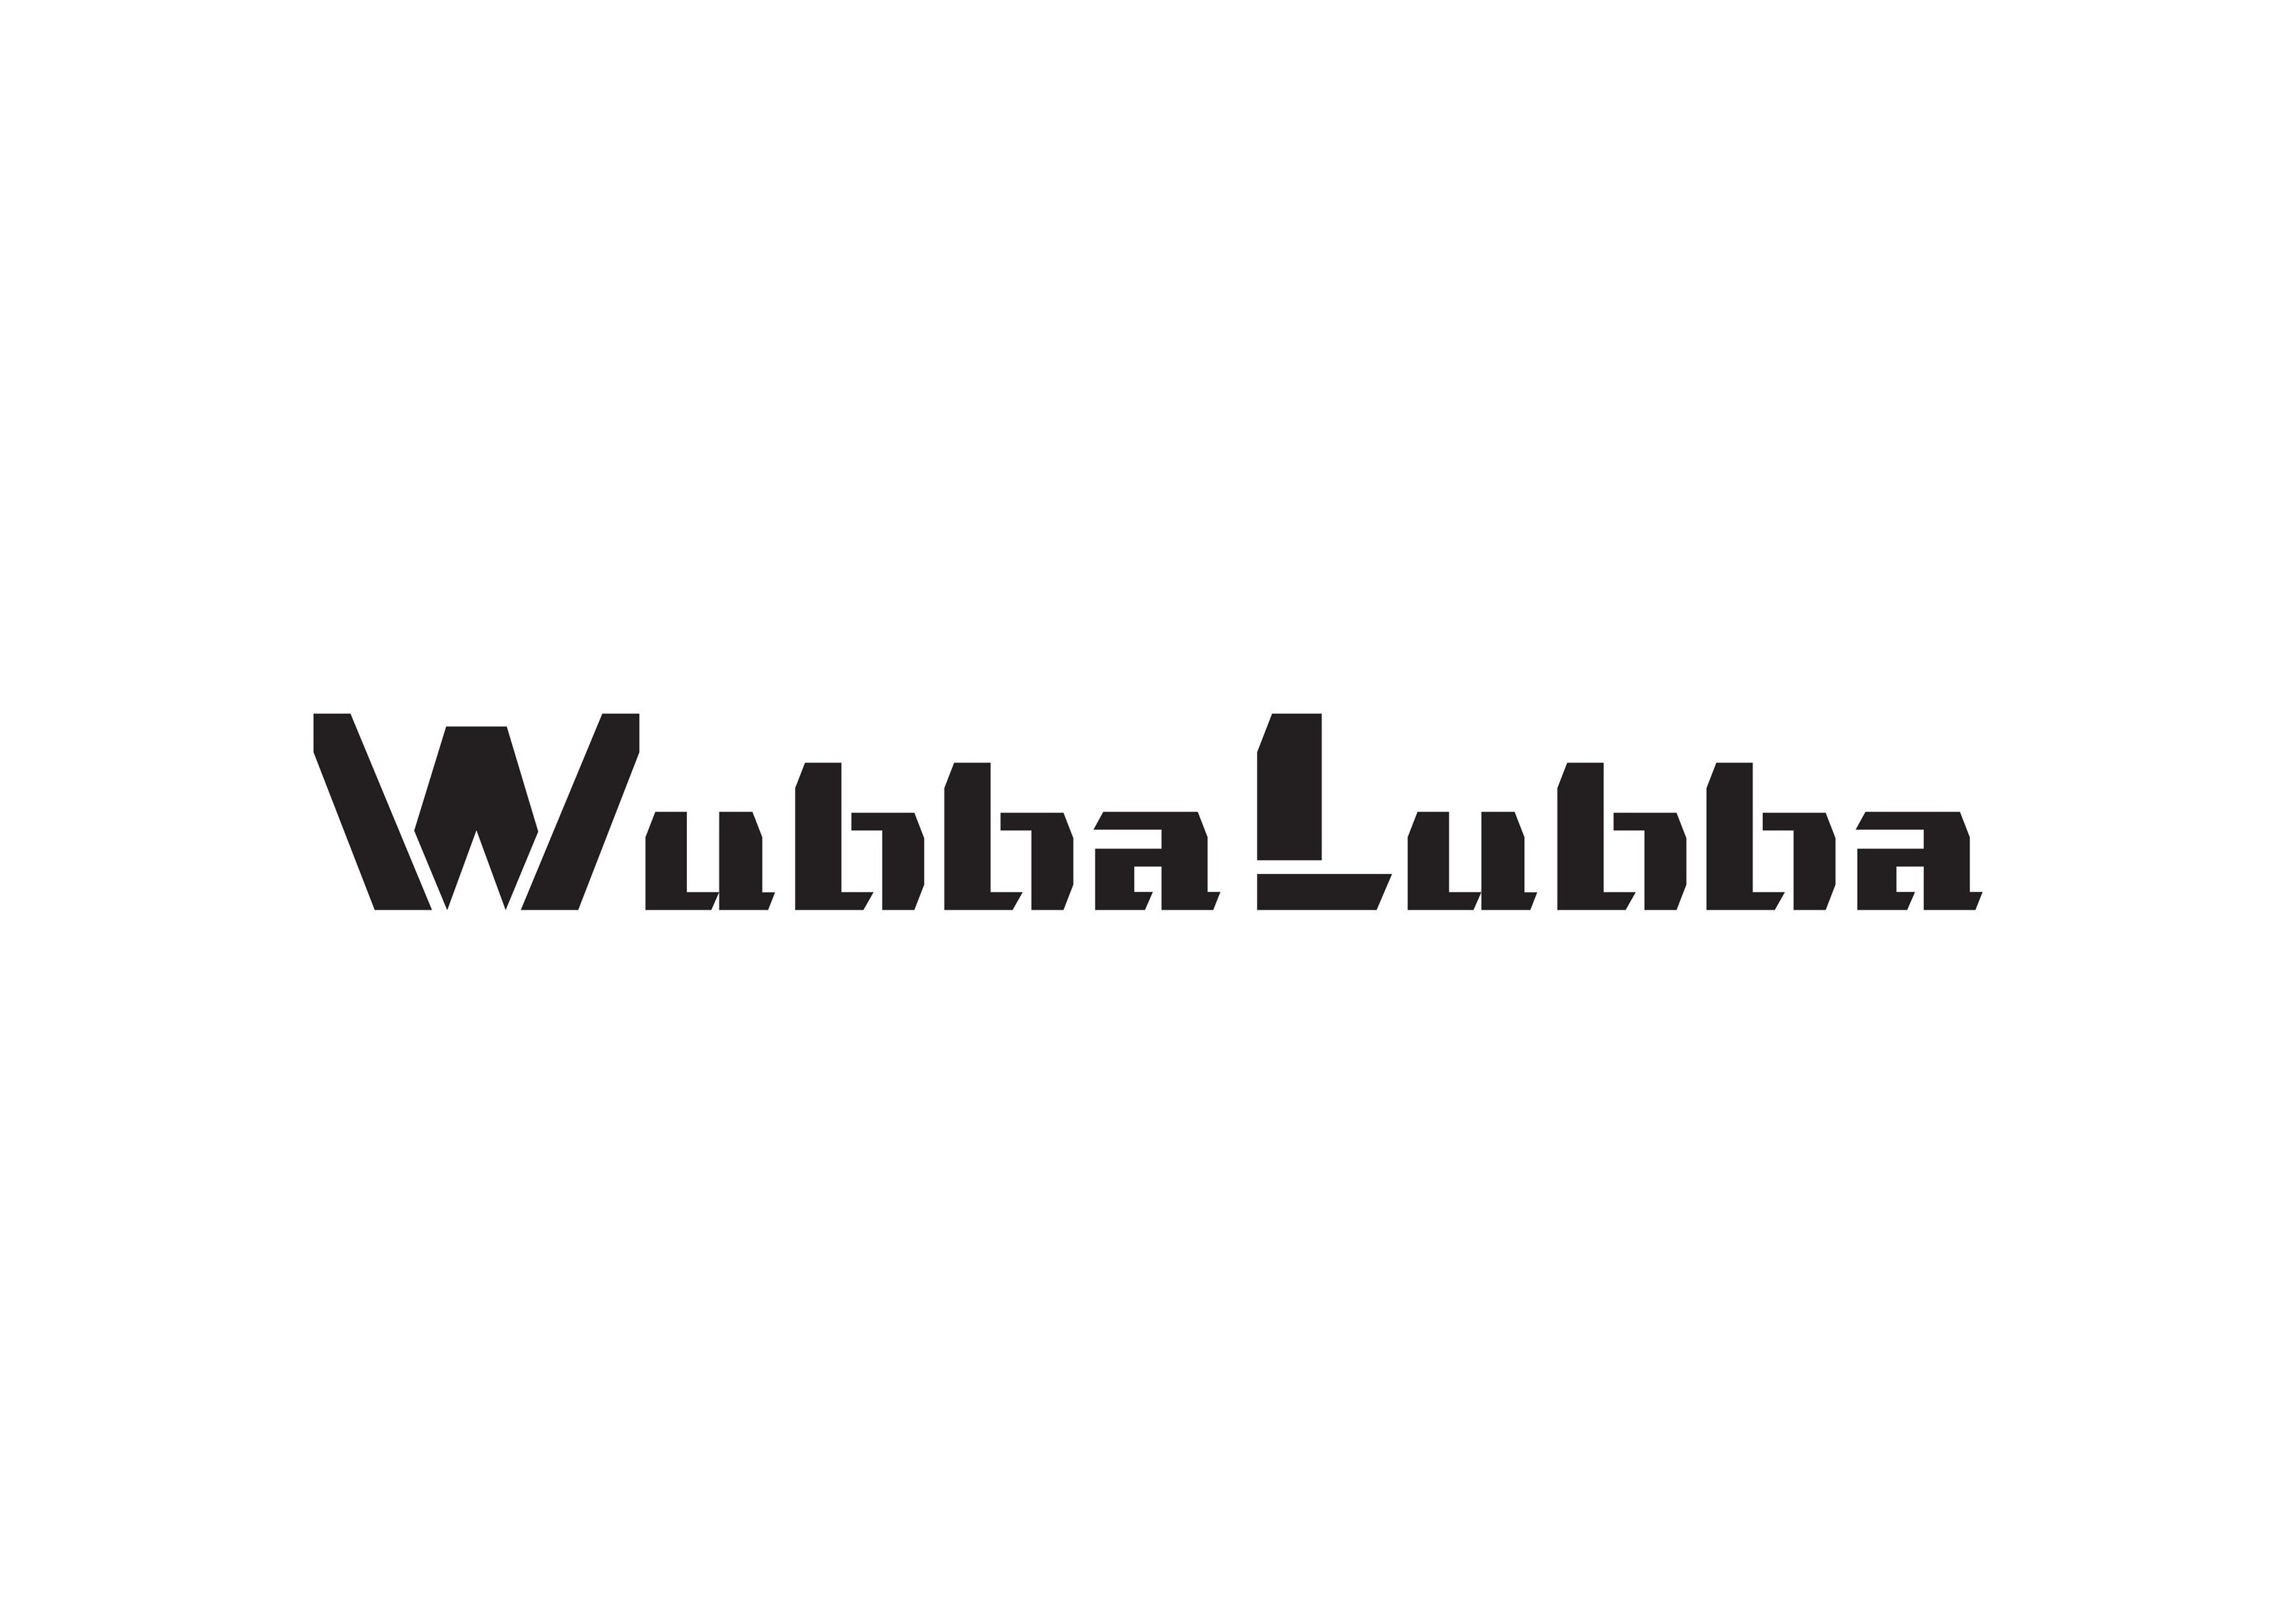 Trademark Logo WUBBALUBBA